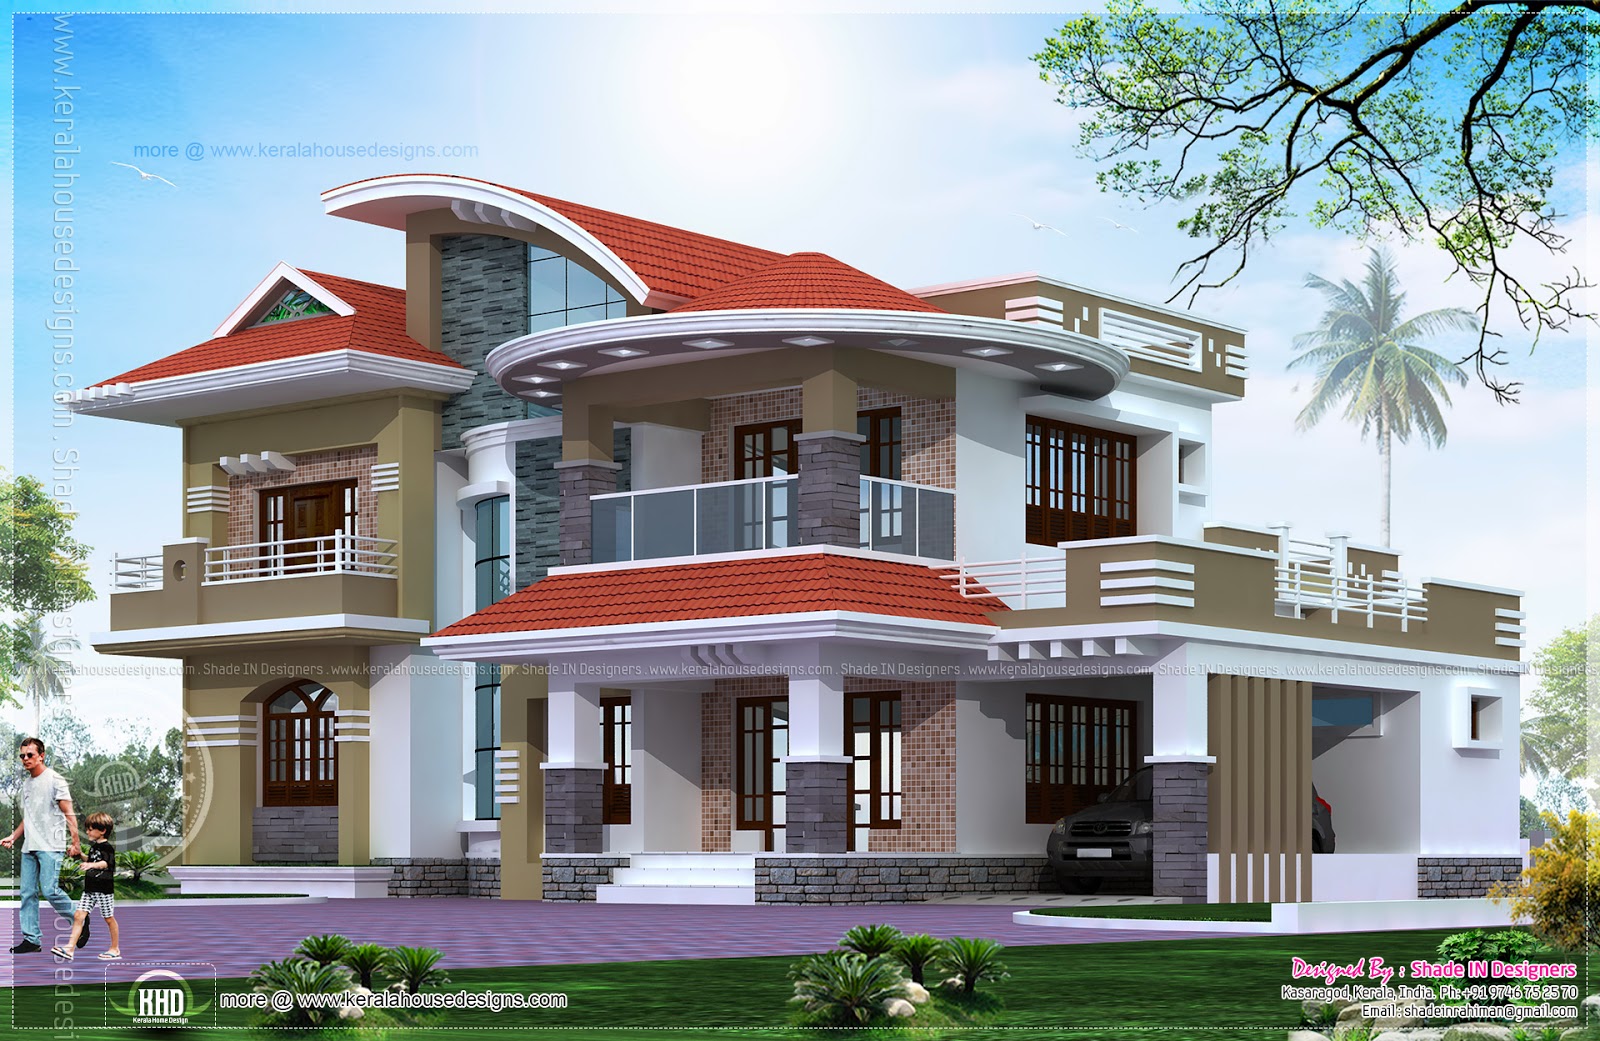  5  bedroom  Luxury house  in Kasaragod Kerala  home  design  